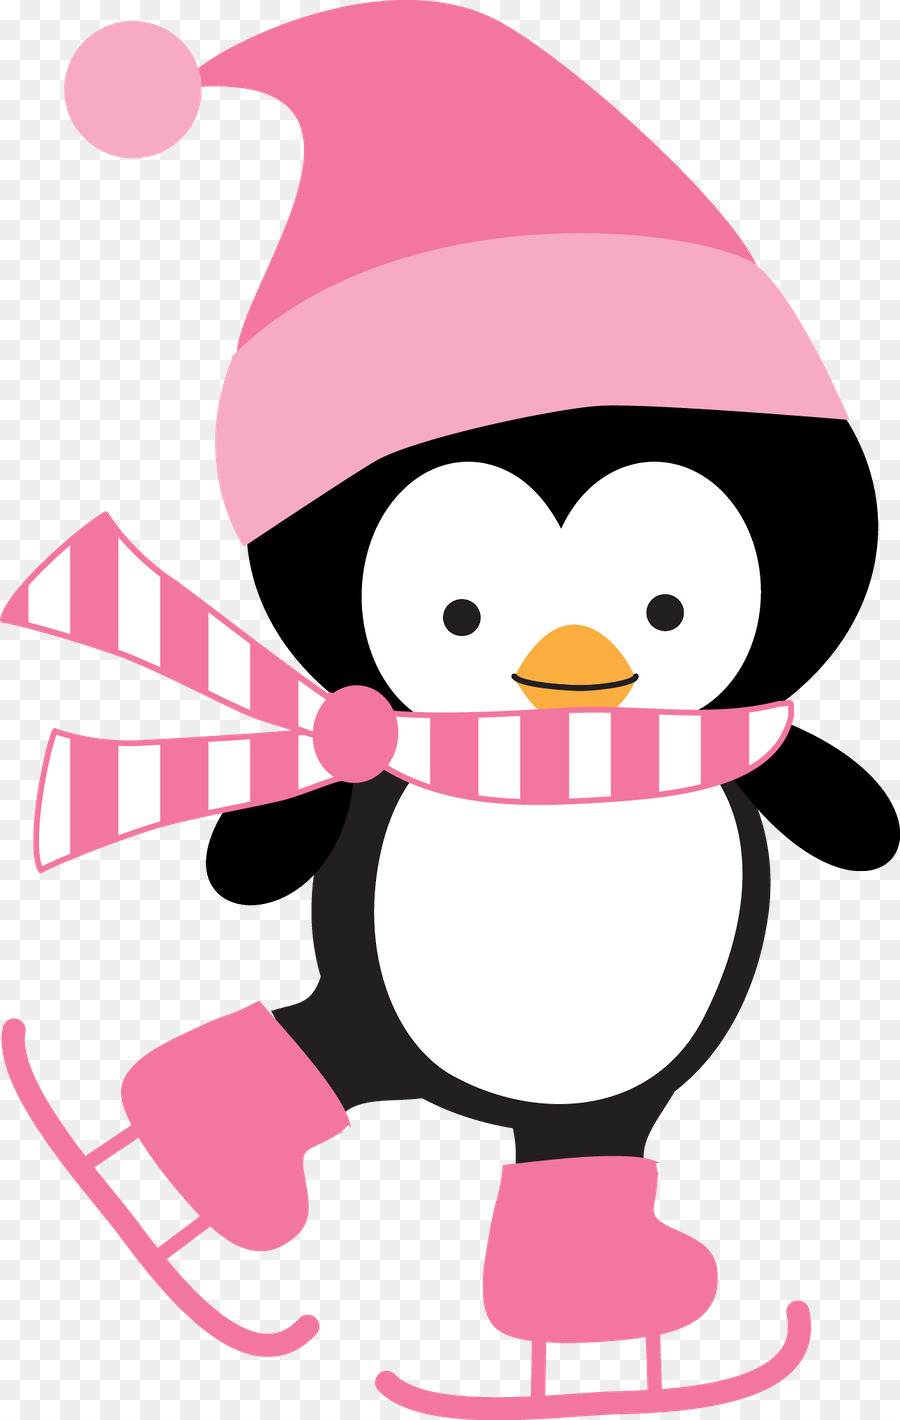 Pinguin Computer Icons Clip art - Pinguin